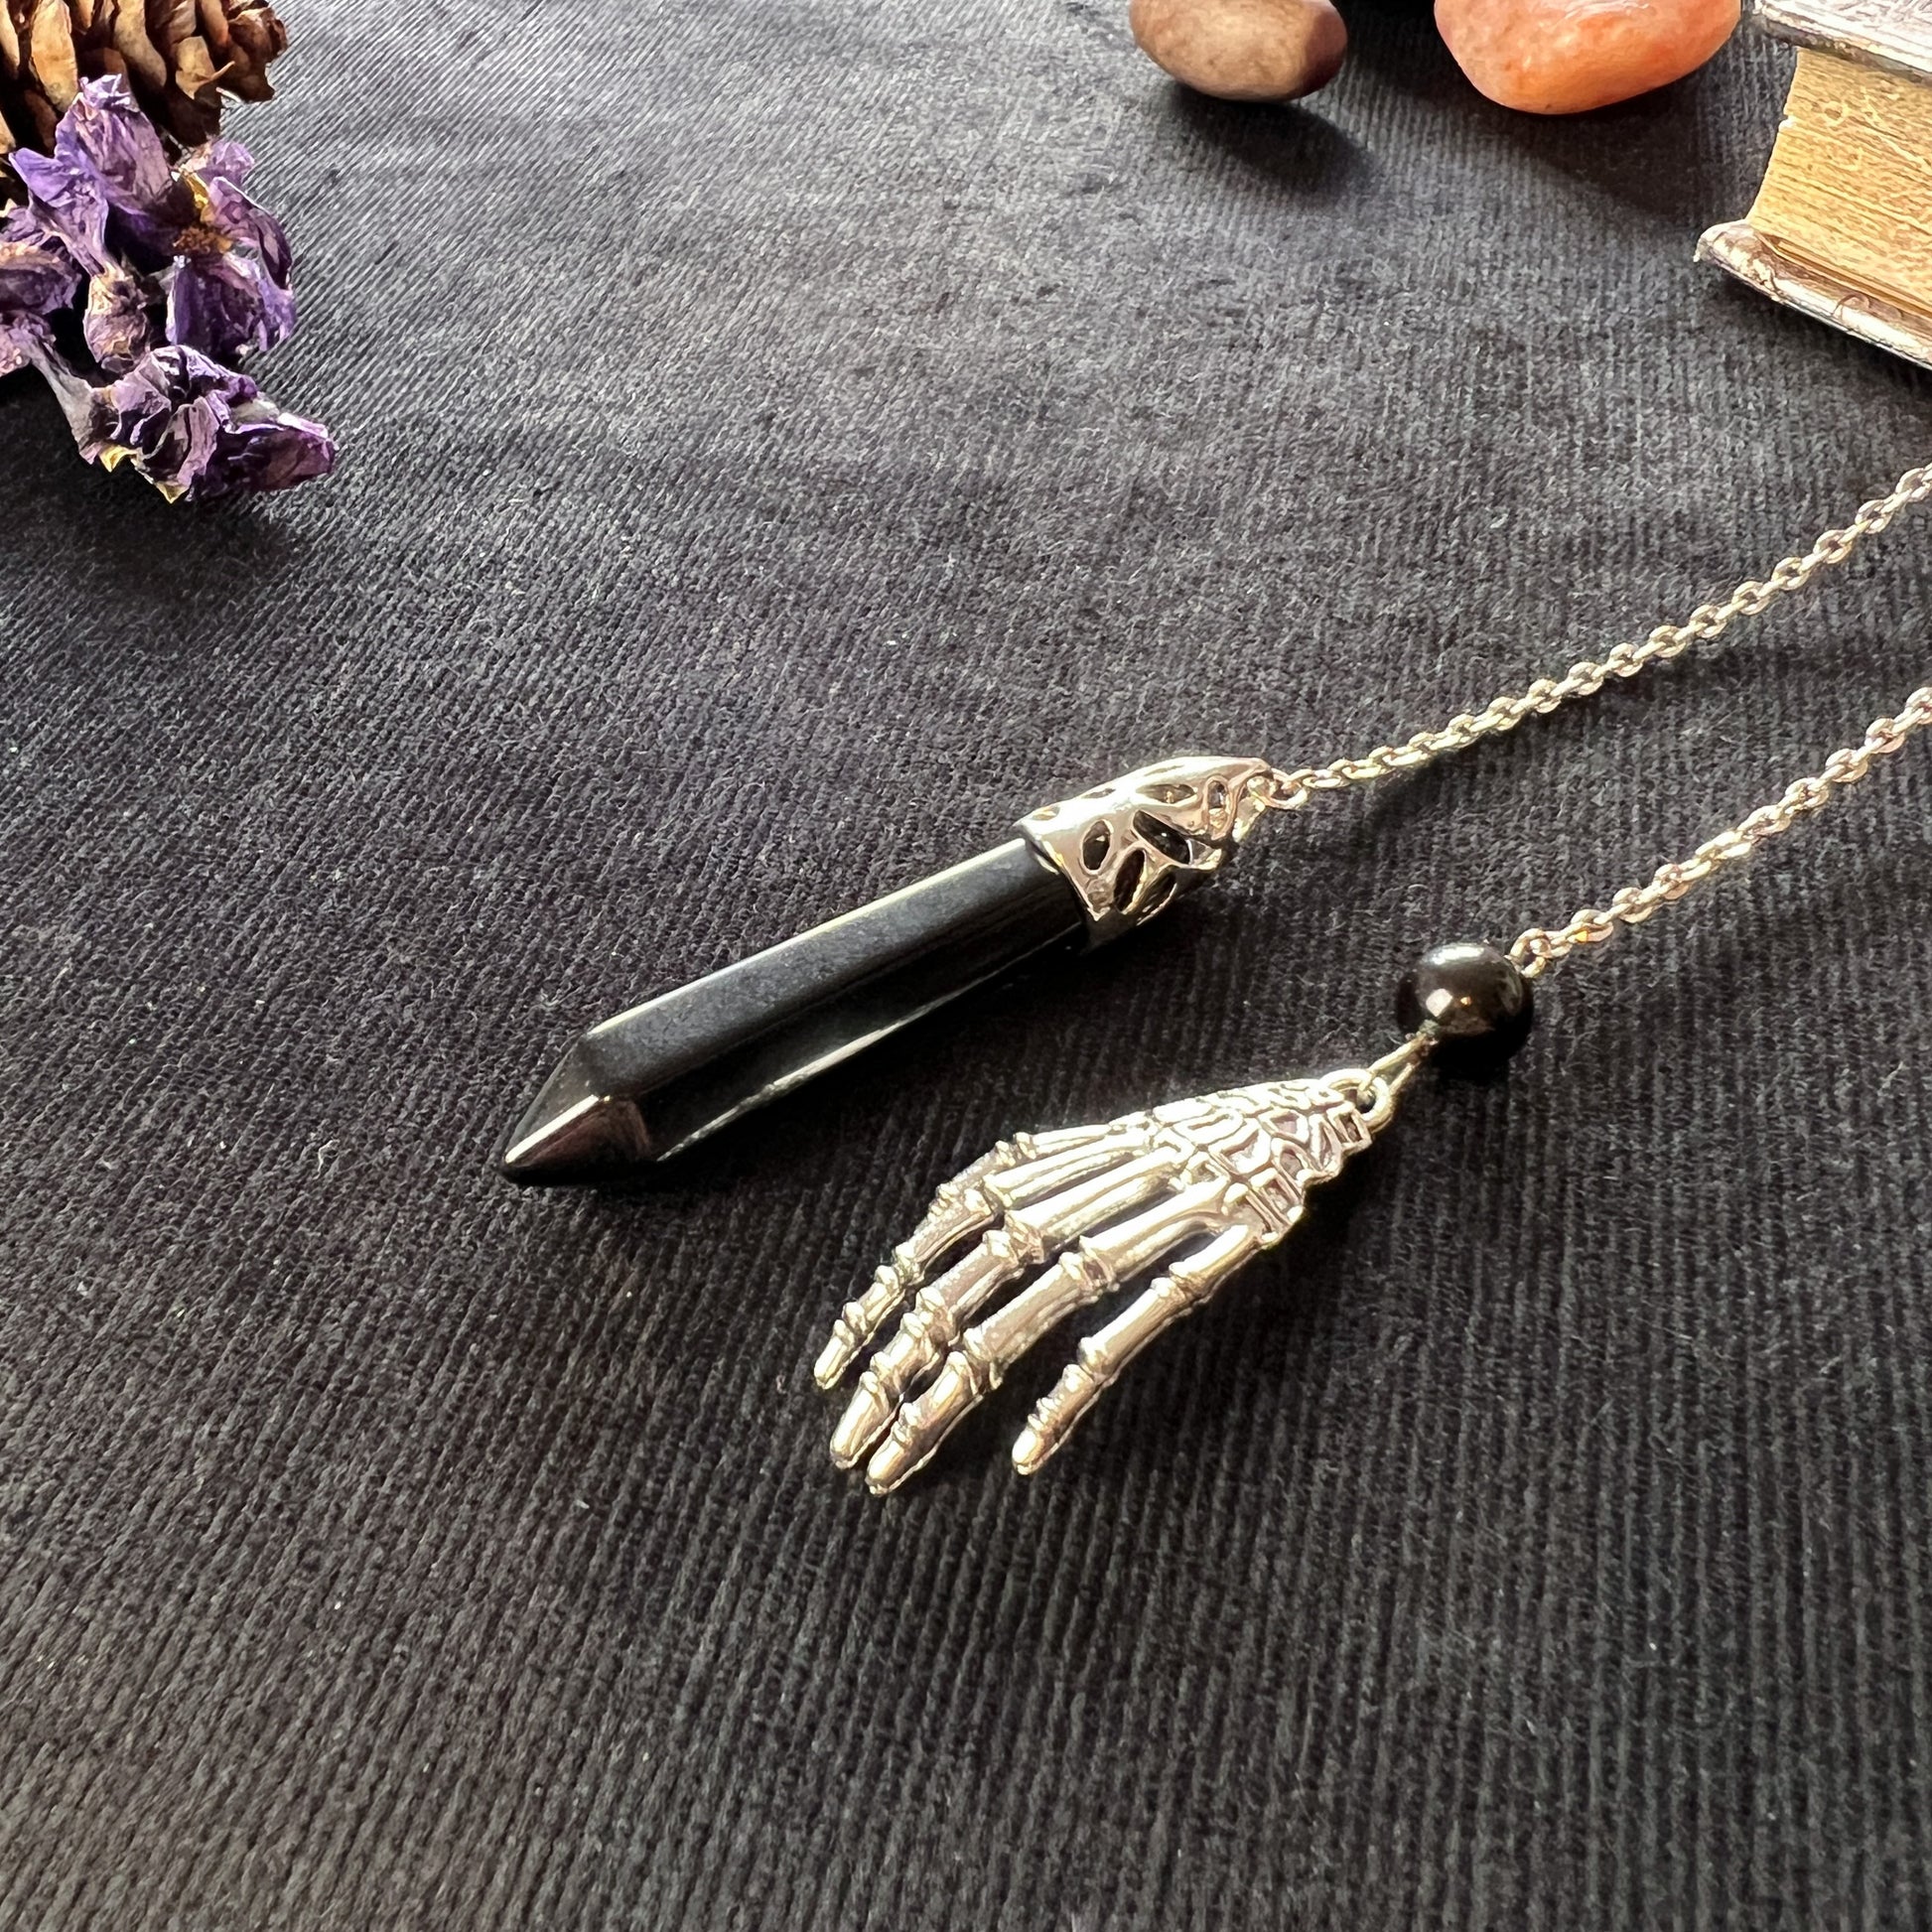 Divination tool Onyx and obsidian skeleton hand goth pendulum dowsing spiritual fortune telling witchcraft gothic pendulum